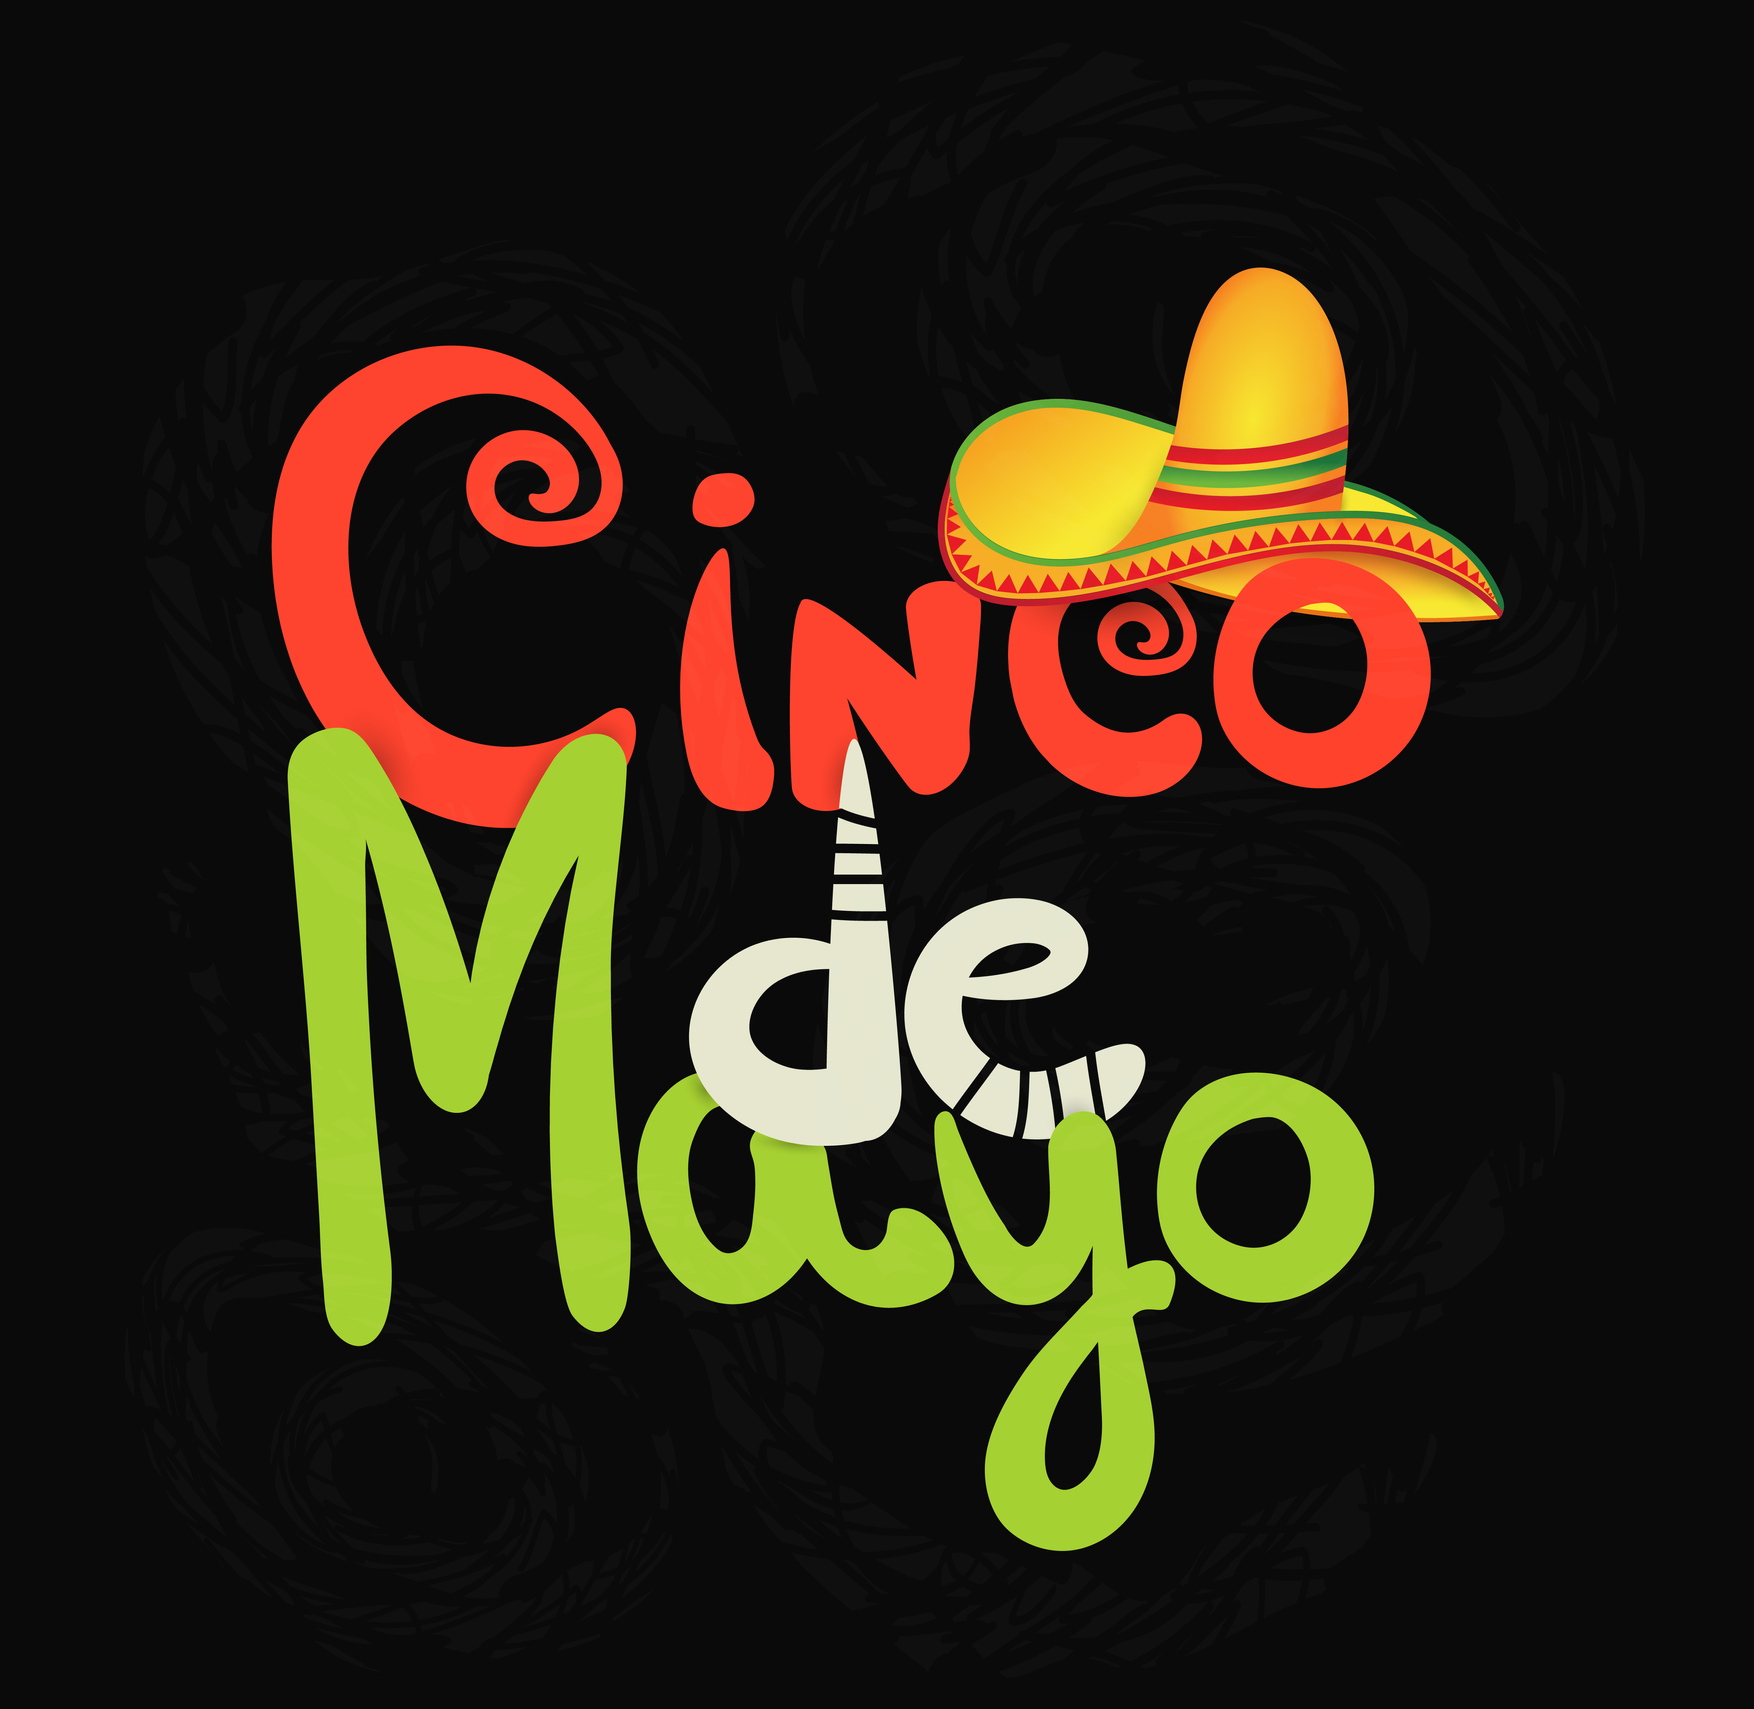 A Closer Look at Cinco de Mayo